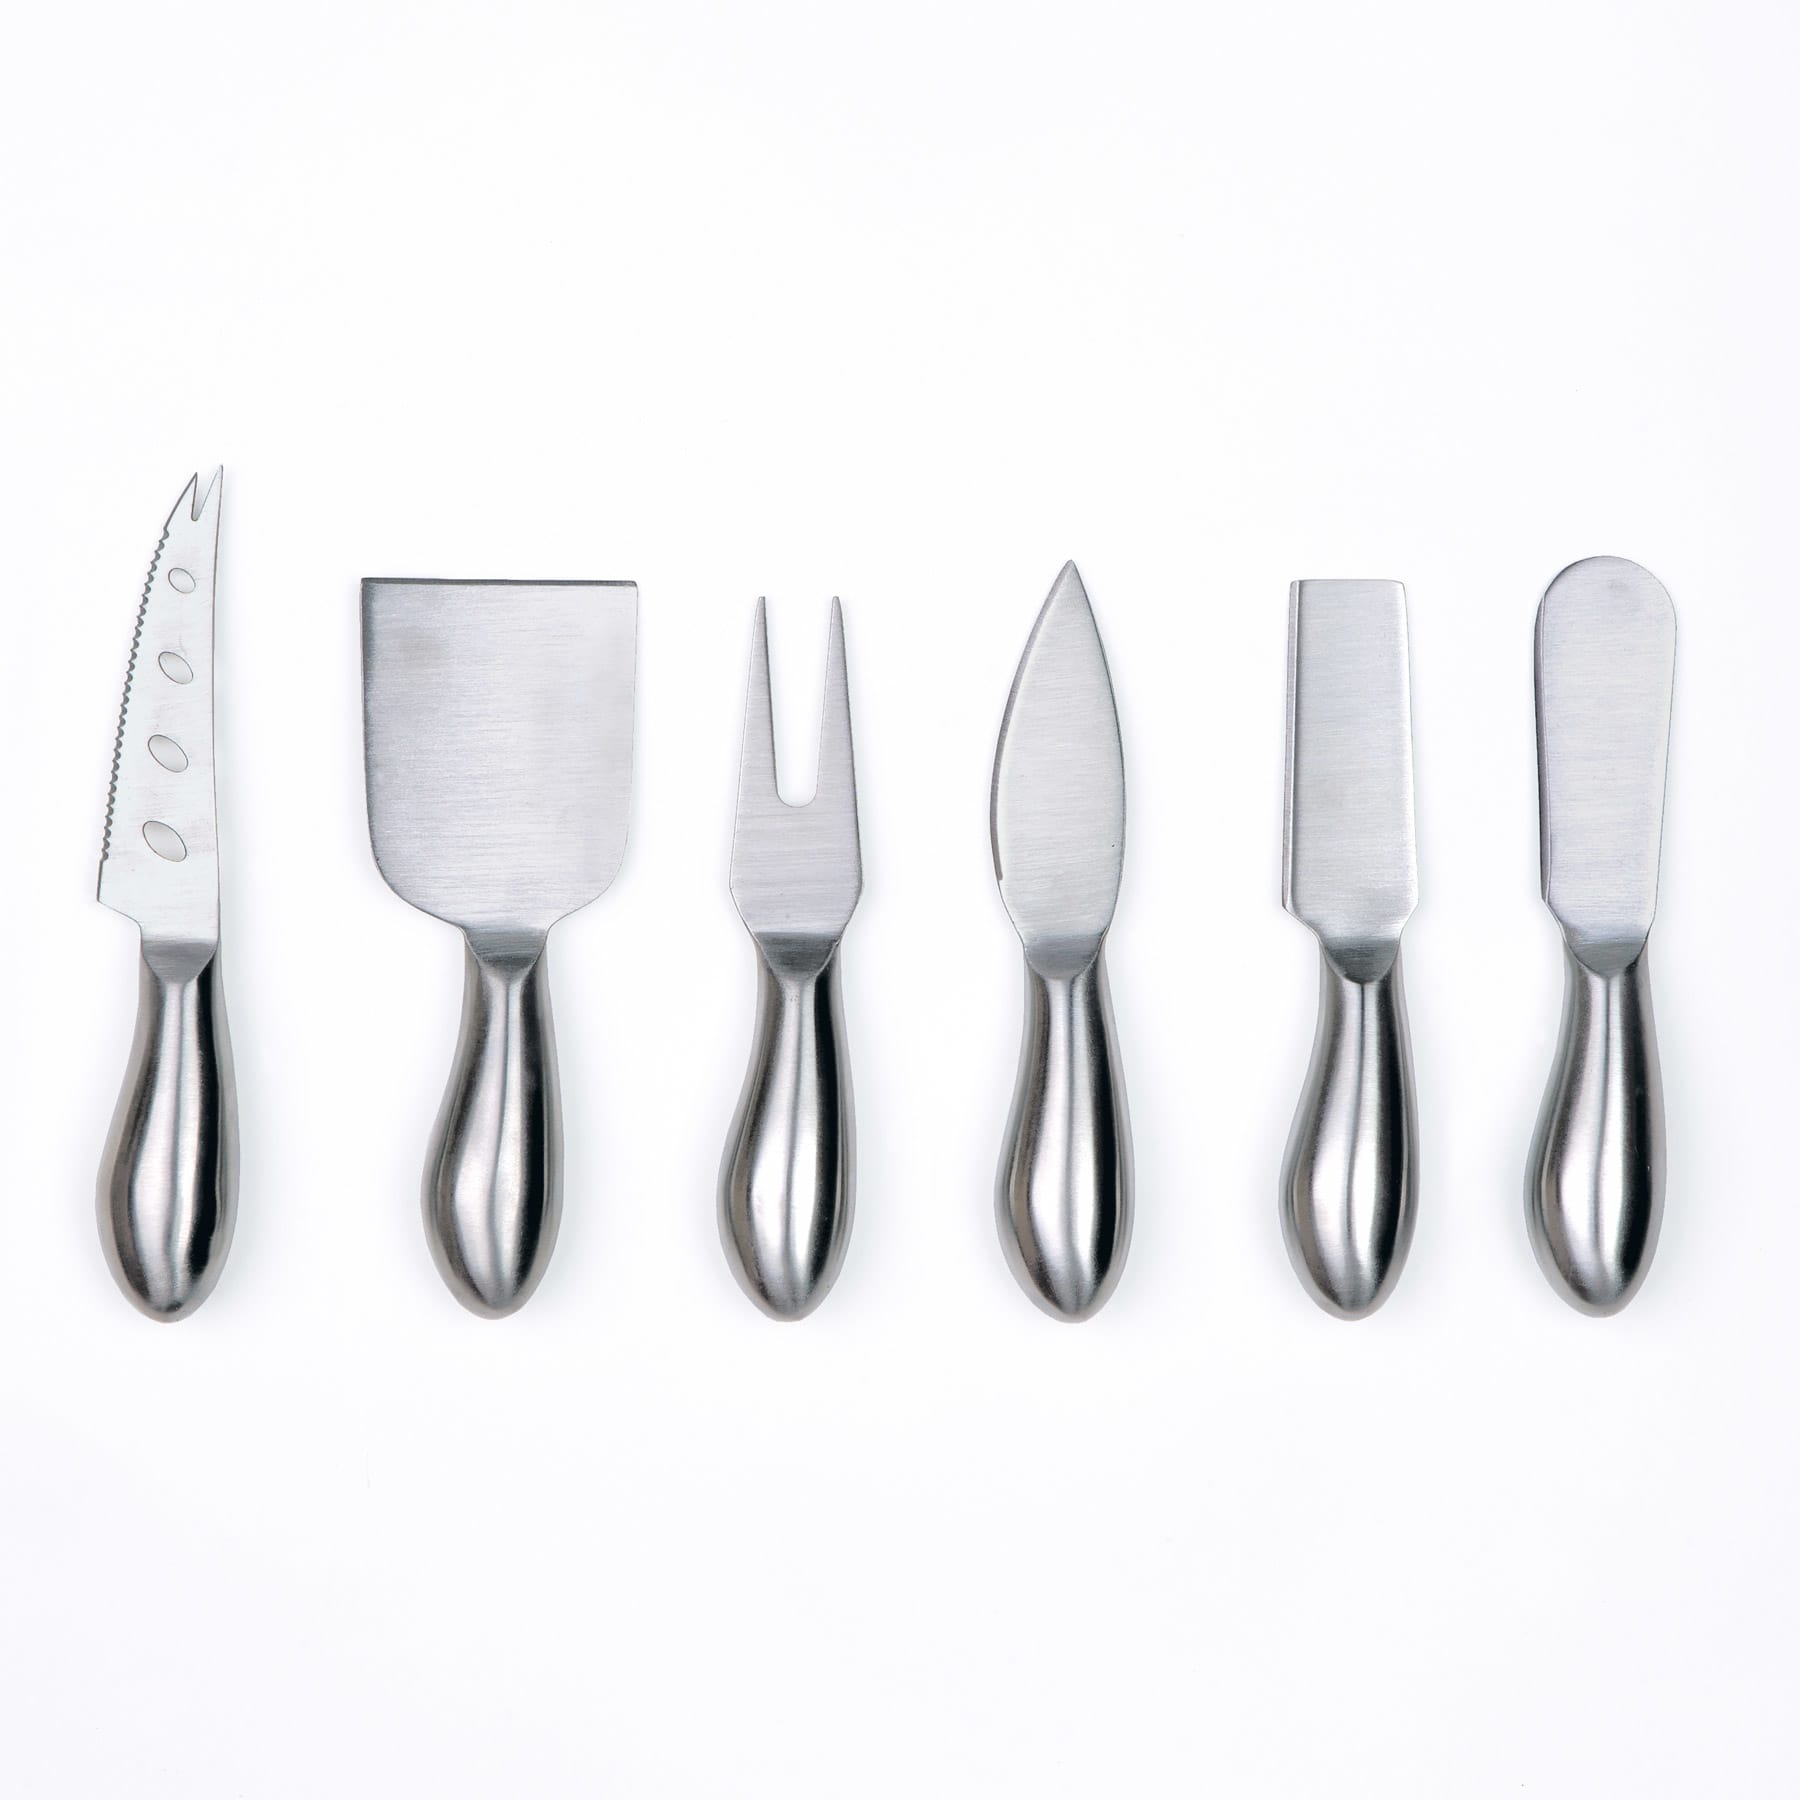 pofcks_formaggio_cheese_knife_6_pcs_set_utensils-3.jpg